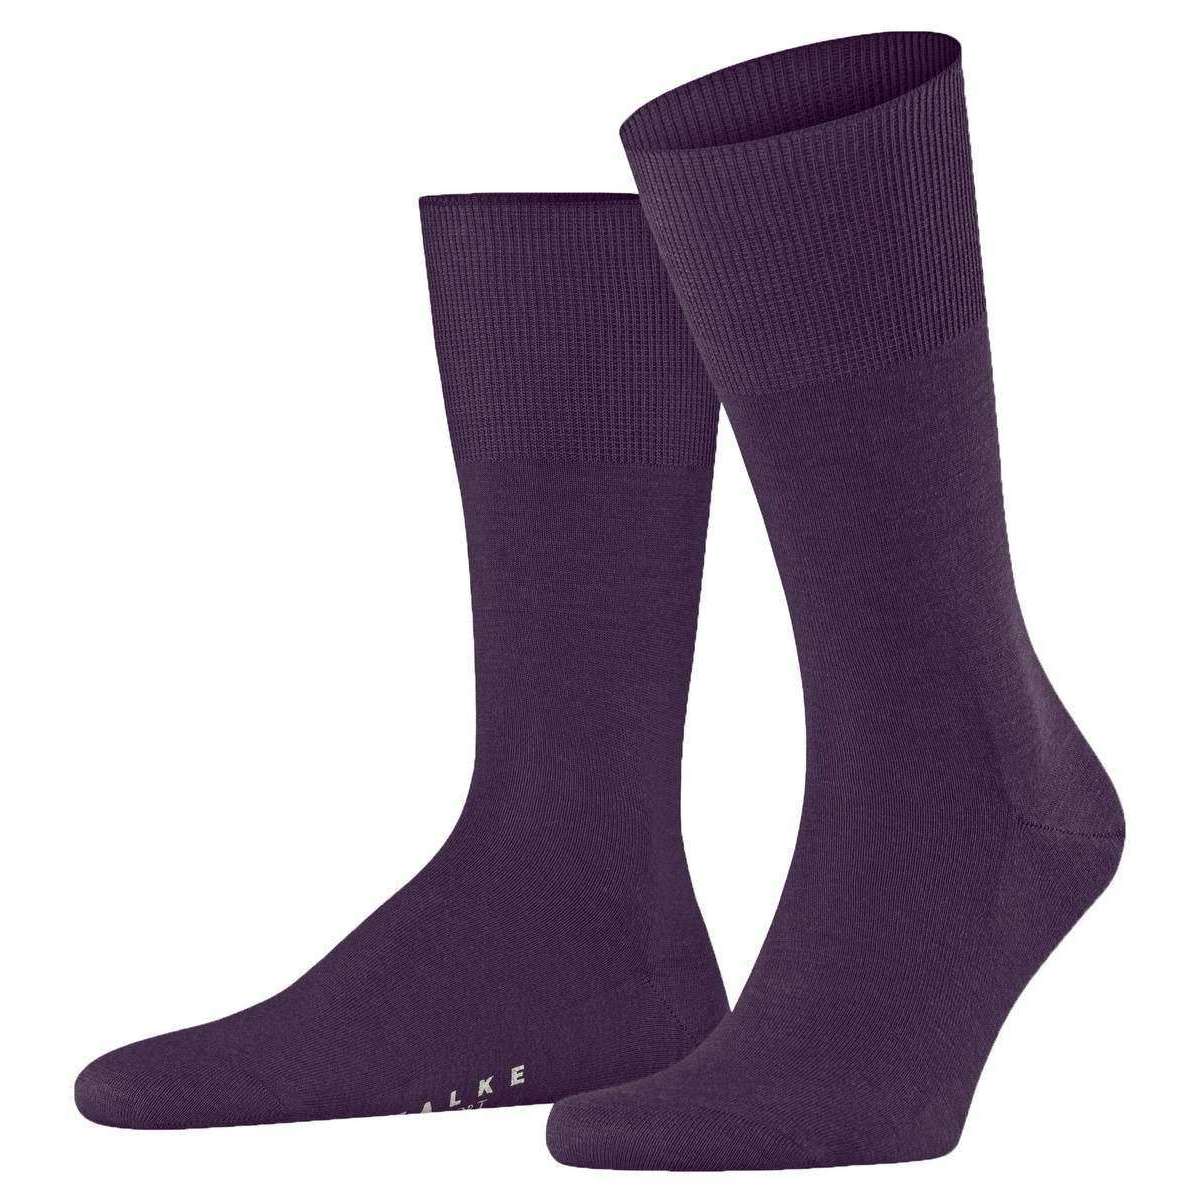 Falke Airport Socks - Wine Berry Purple - Extra Small - 5.5-6.5 UK | 6.5-7.5 US | 39-40 EUR